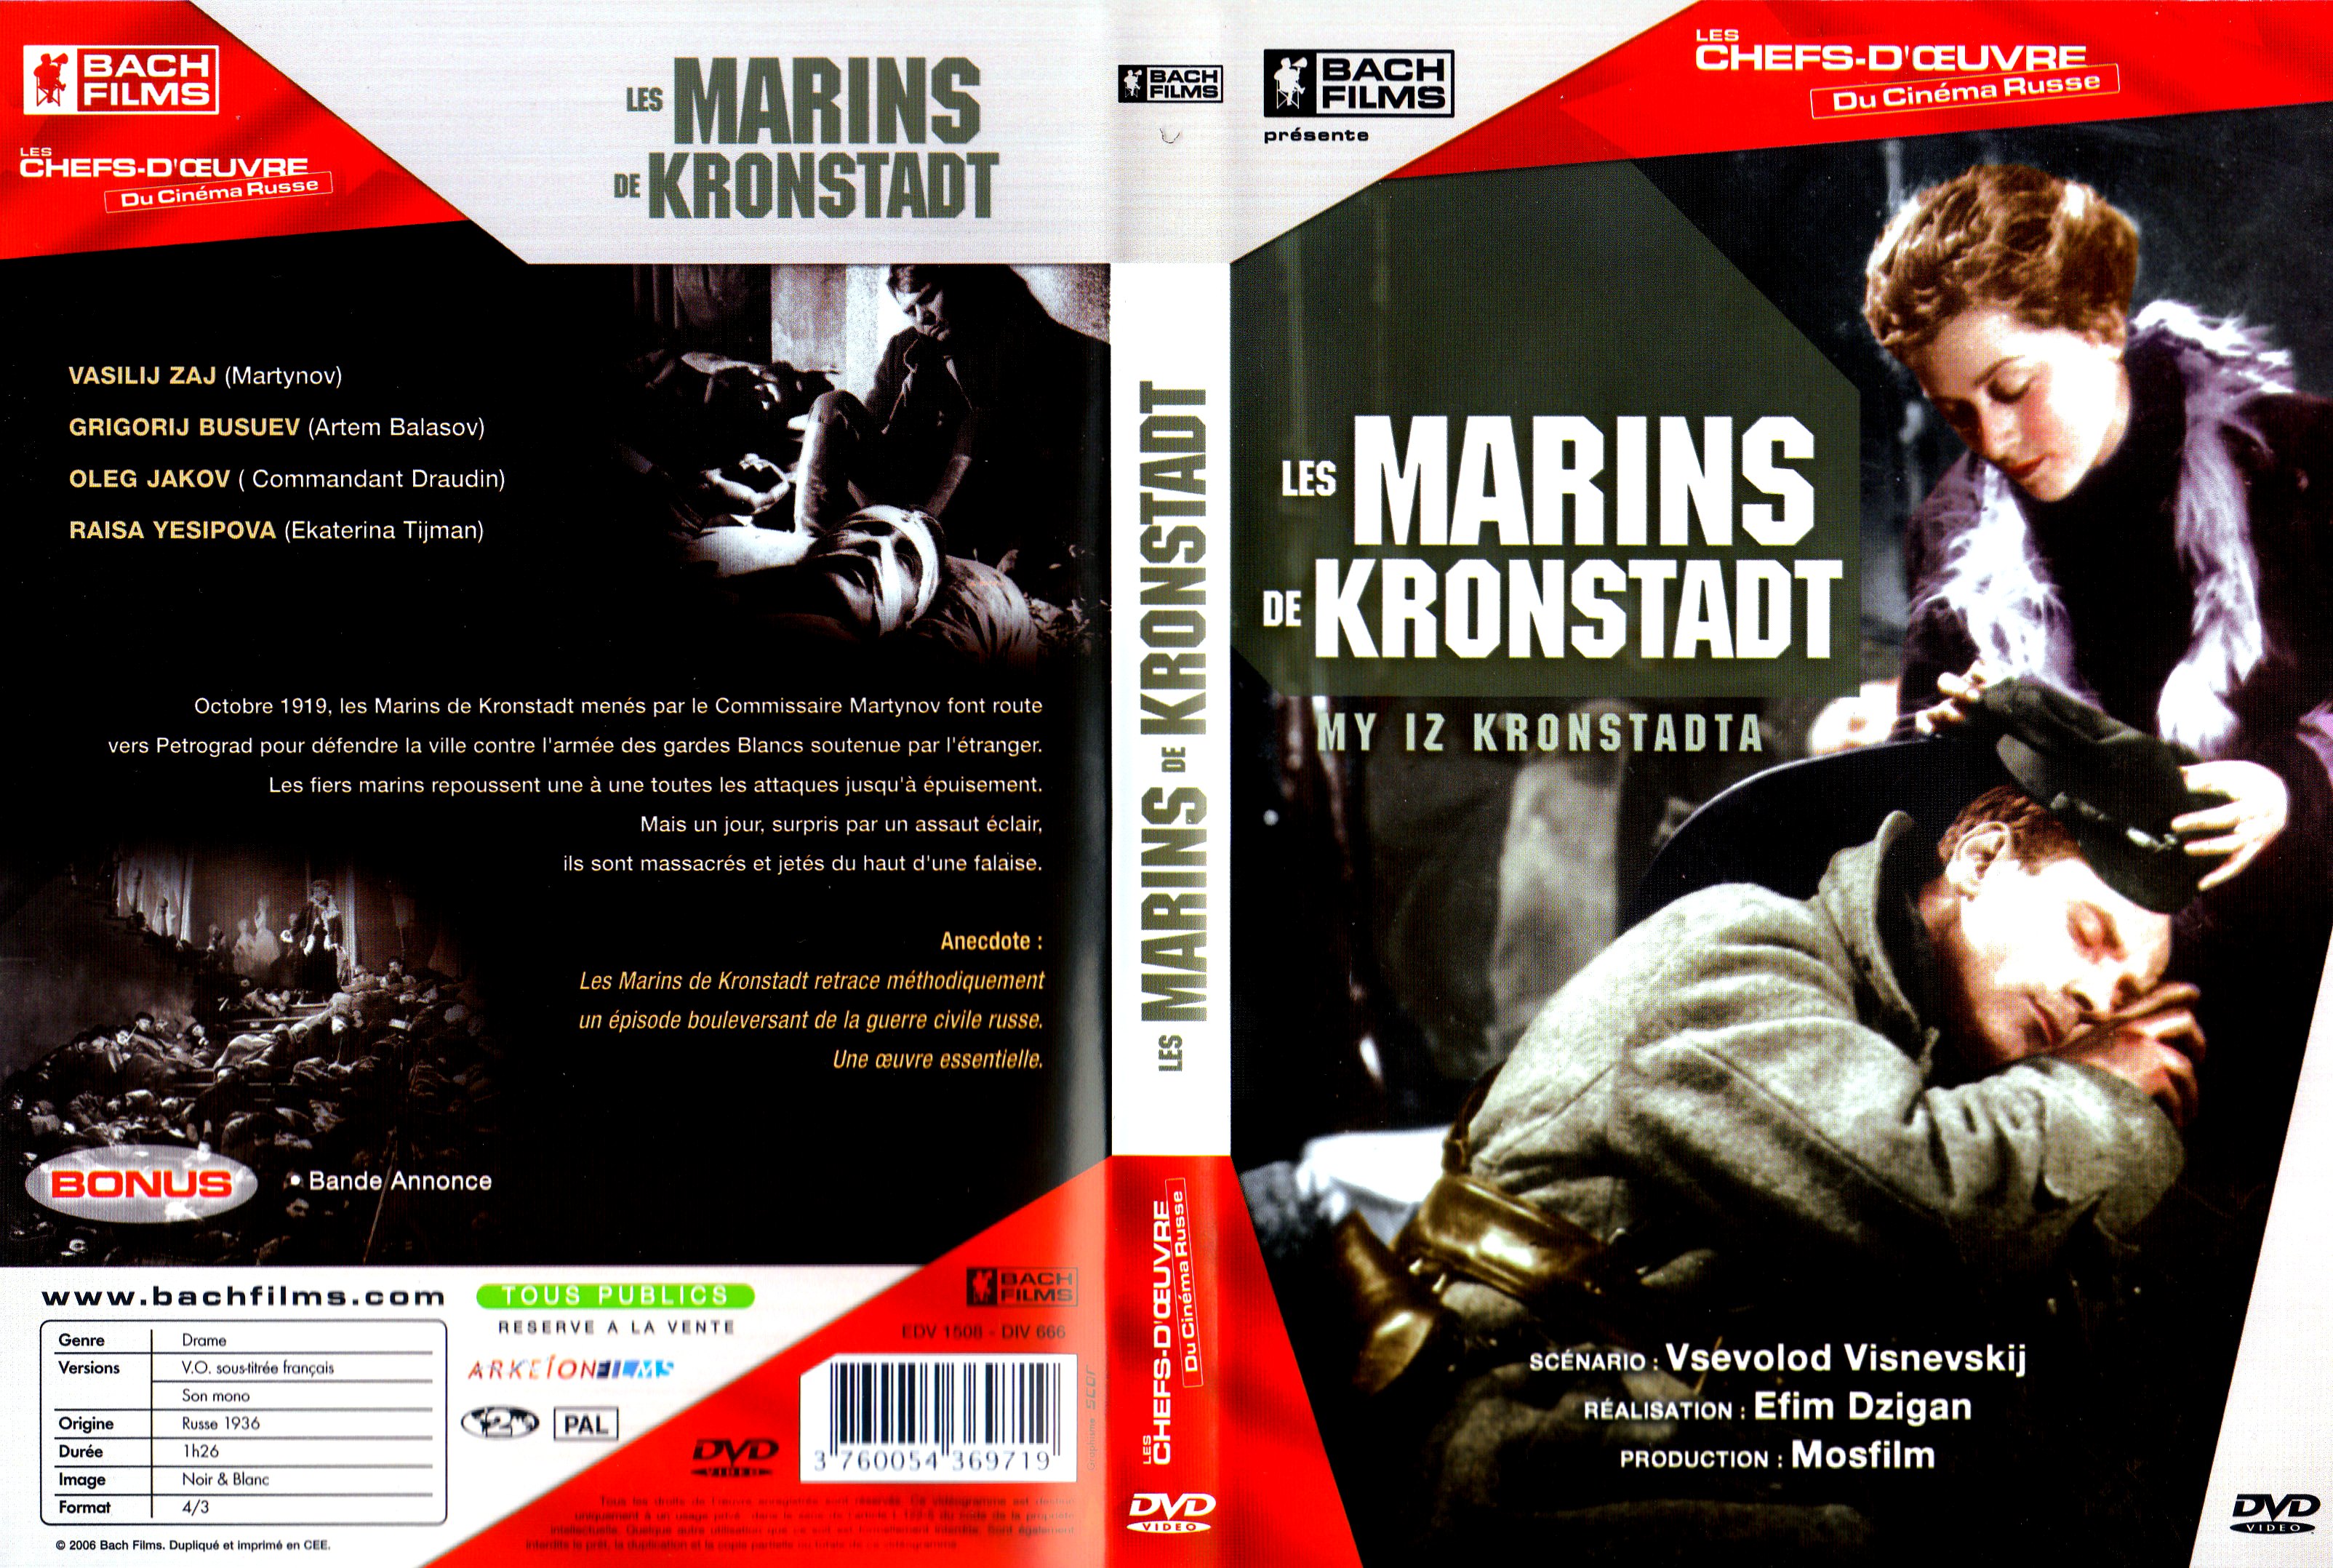 Jaquette DVD Les marins de Kronstadt